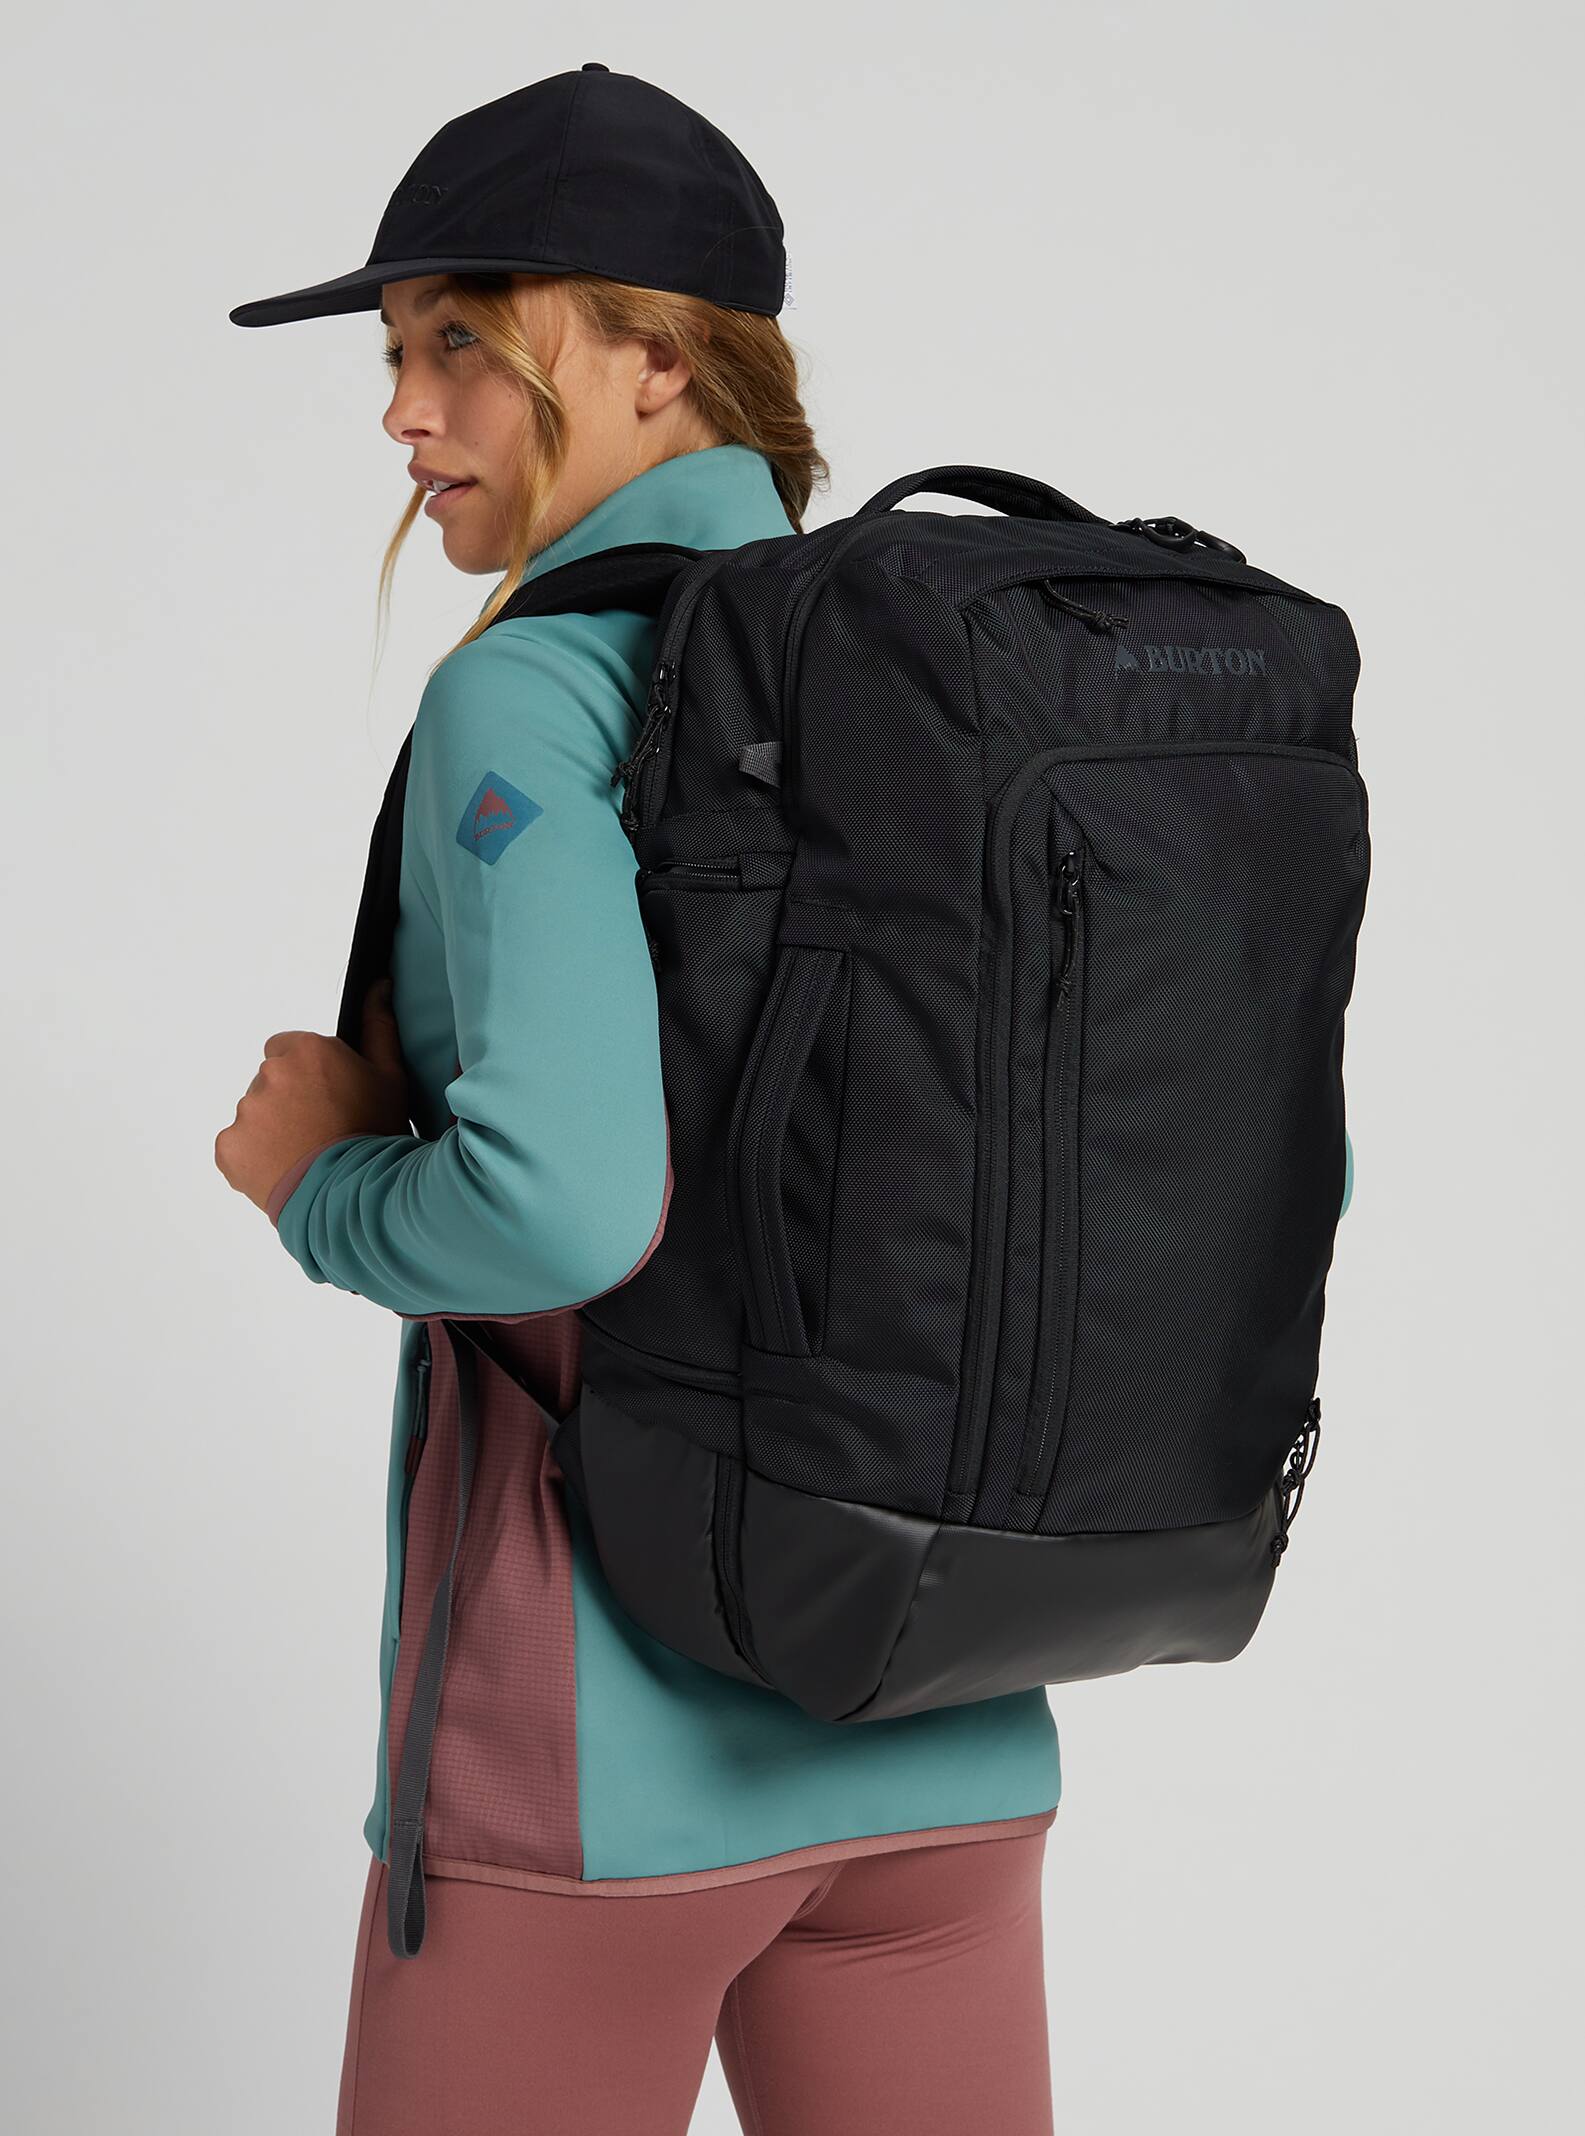 Burton Multipath 27L Travel Backpack | Burton.com Winter 2021 US